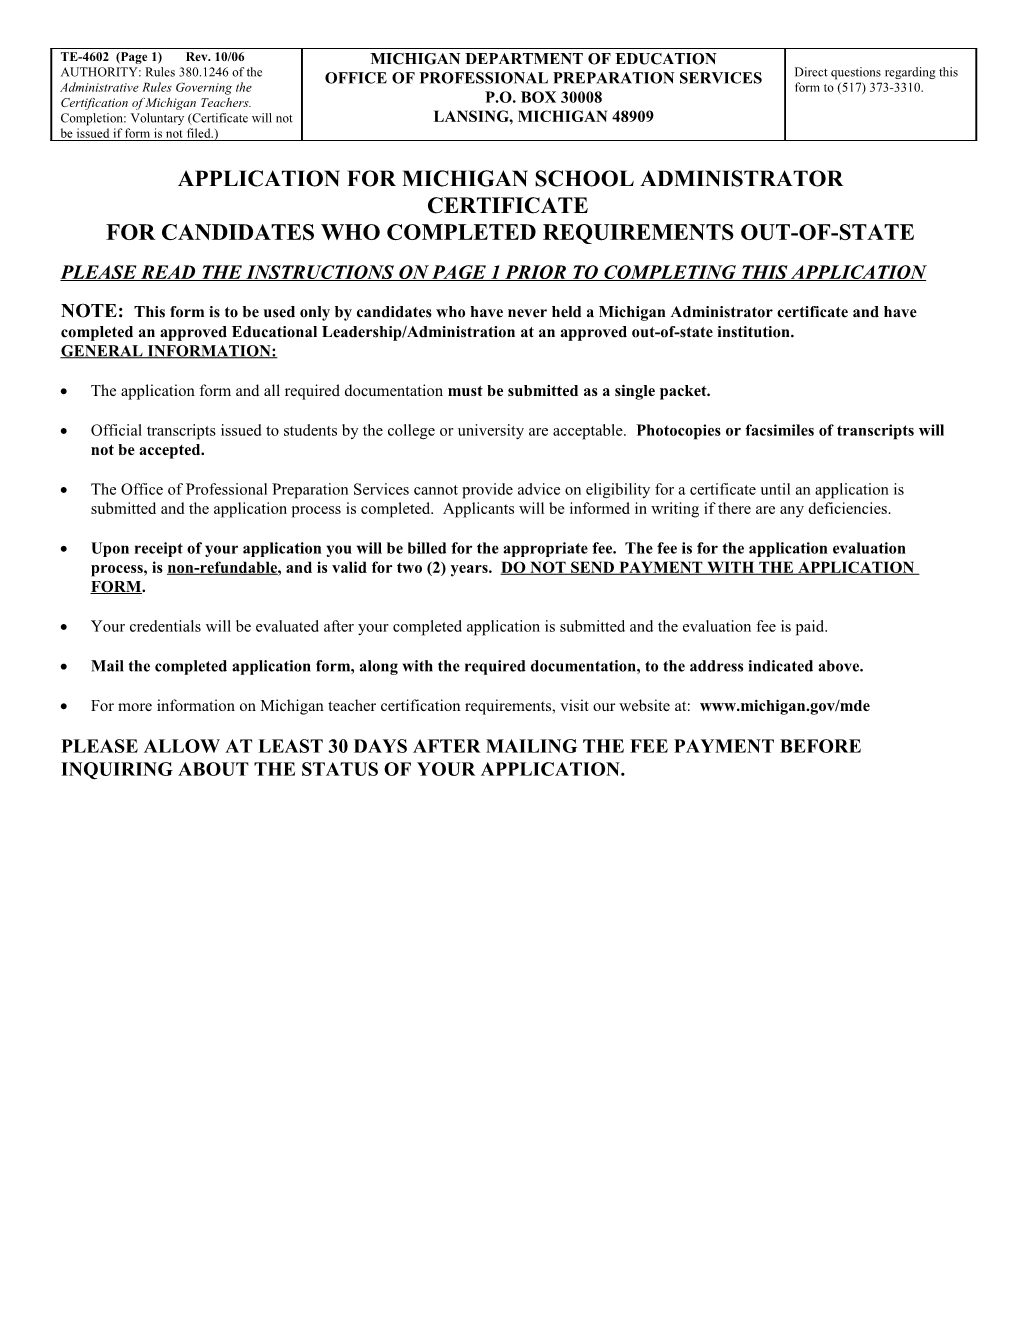 Application for Michigan School Administrator